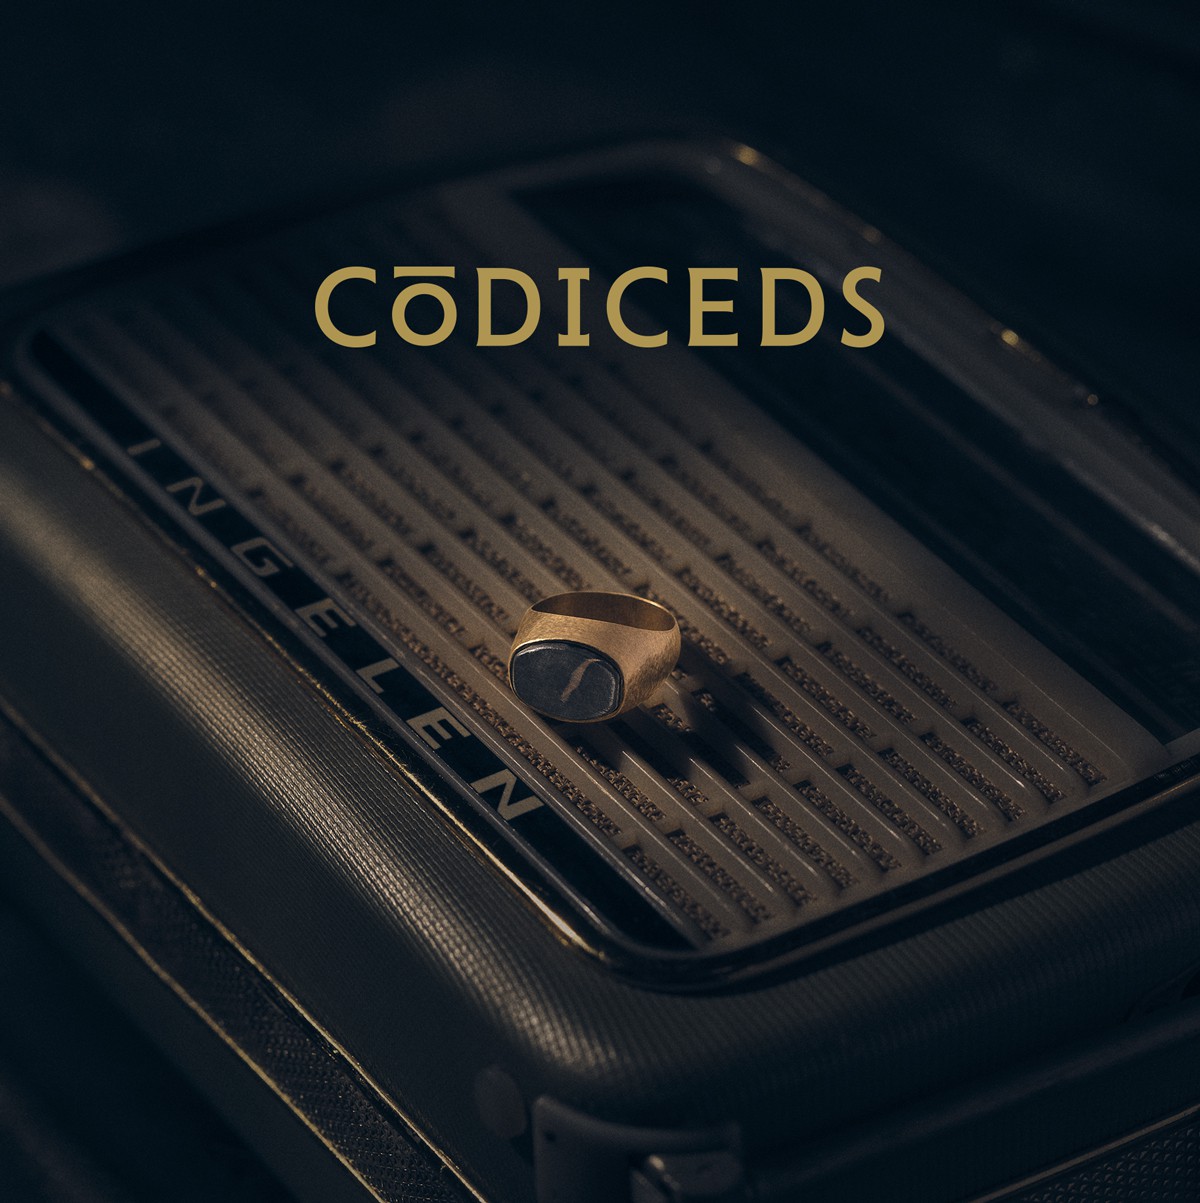 CōDICEDS